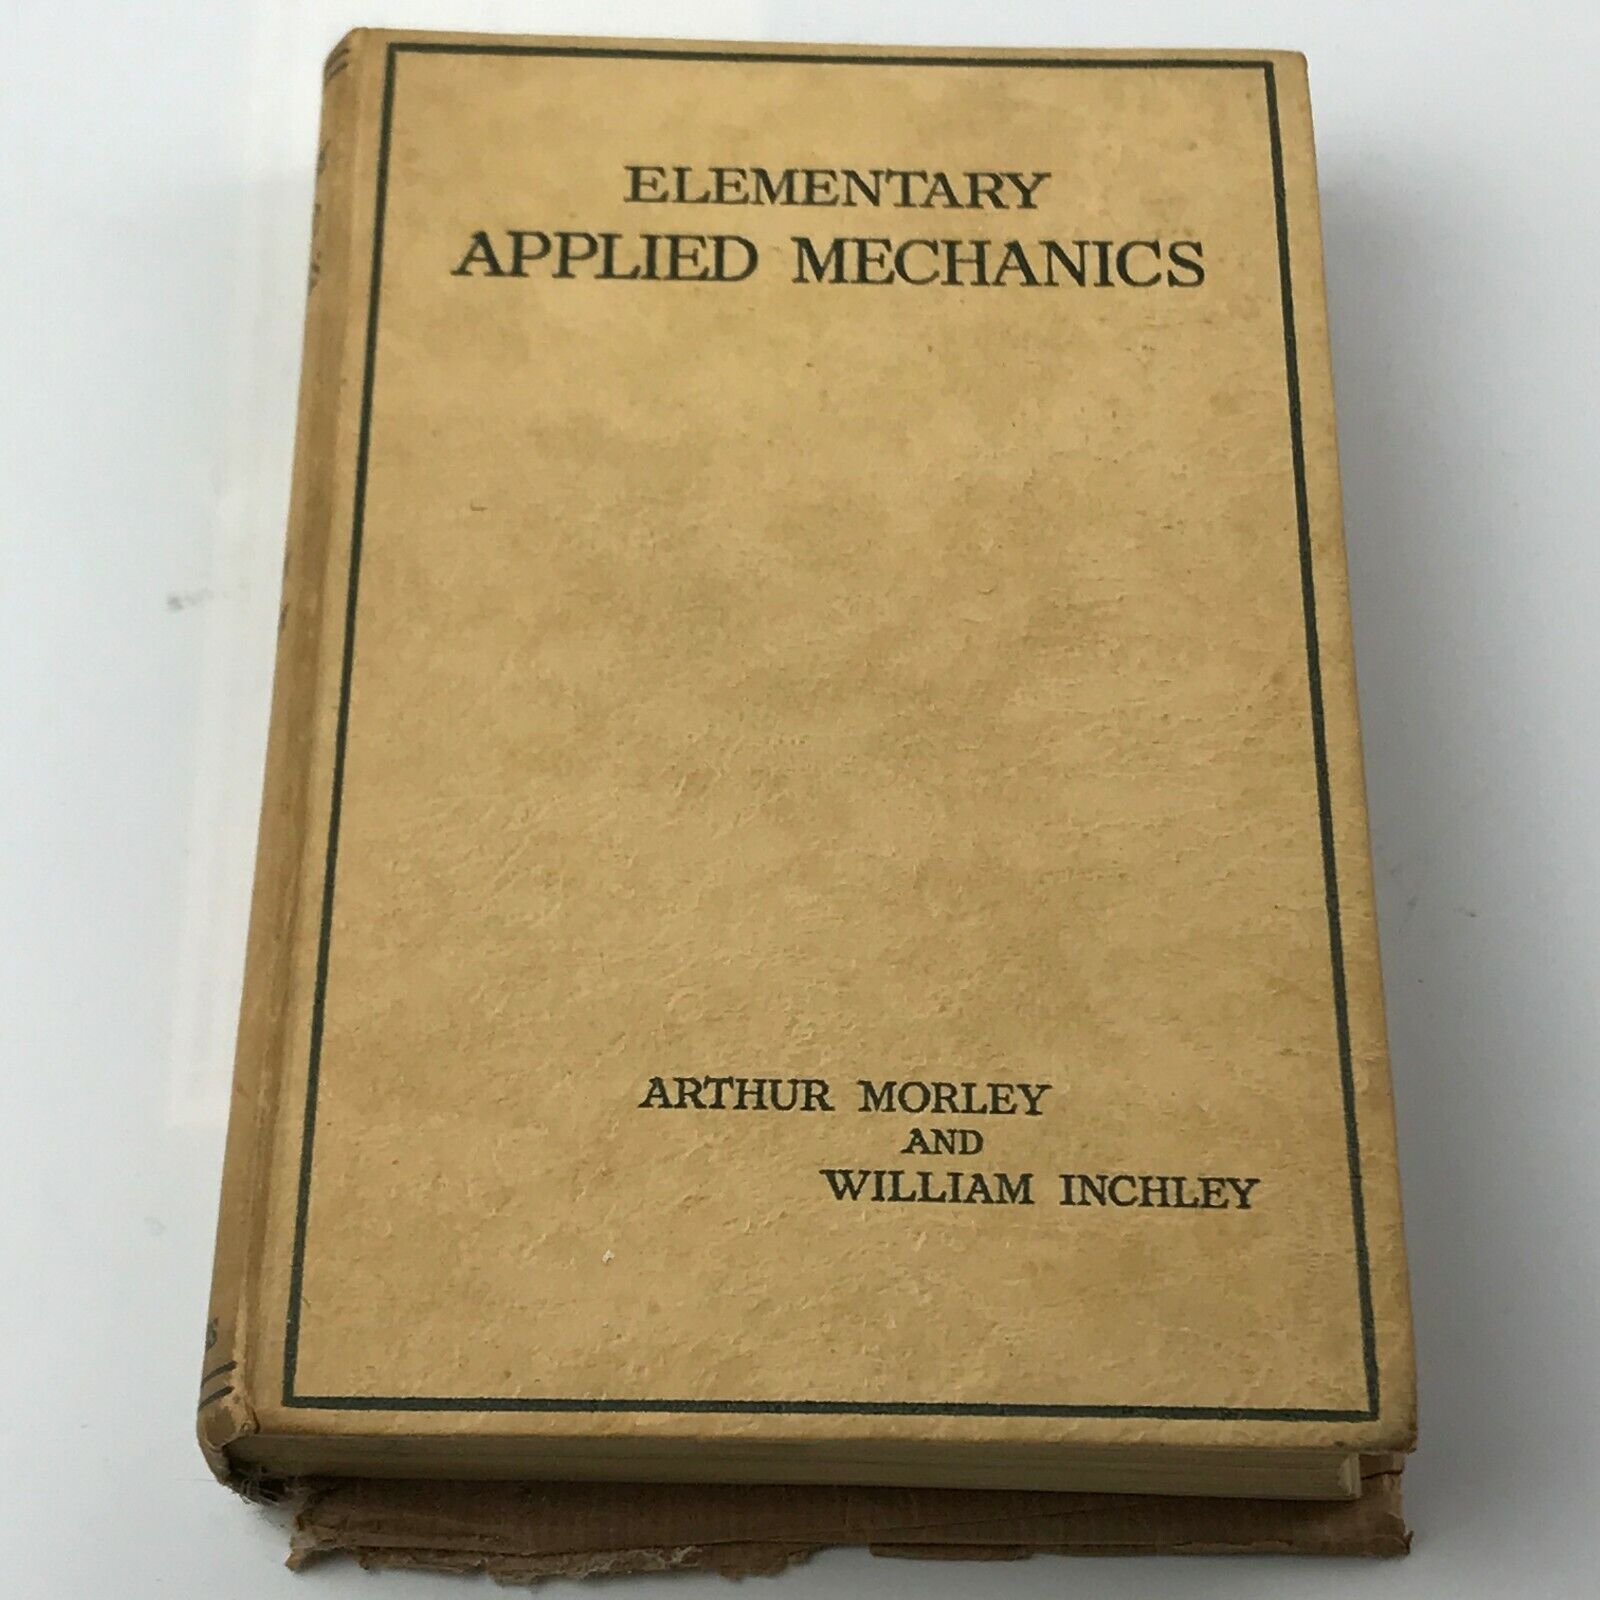 VINTAGE ELEMENTARY APPLIED MECHANICS MORLEY INCHLEY 1947 IMPRESSION BOOK